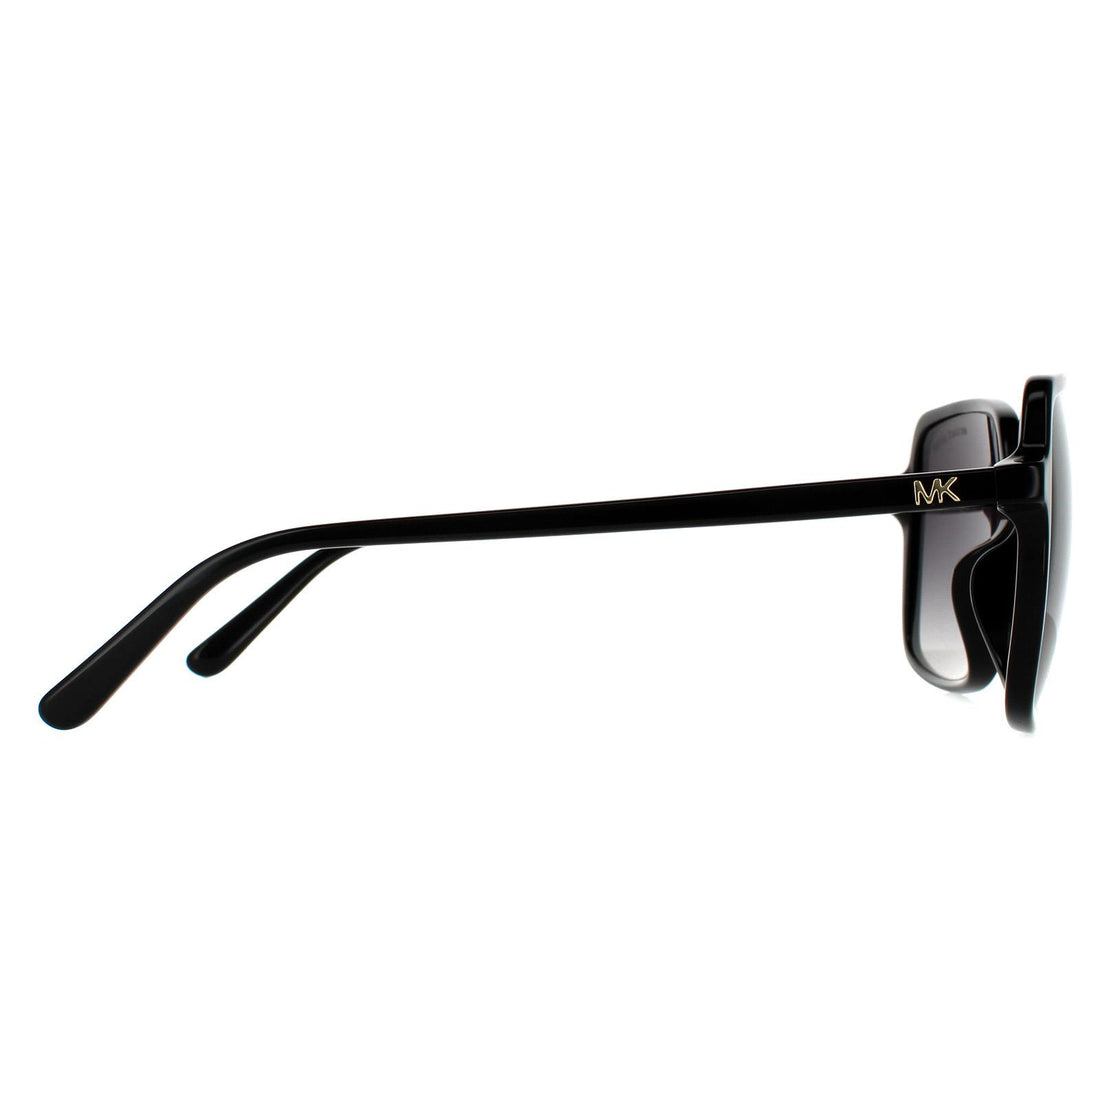 Michael Kors Sunglasses MK2098U 3781T3 Grey Grey Gradient Polarized